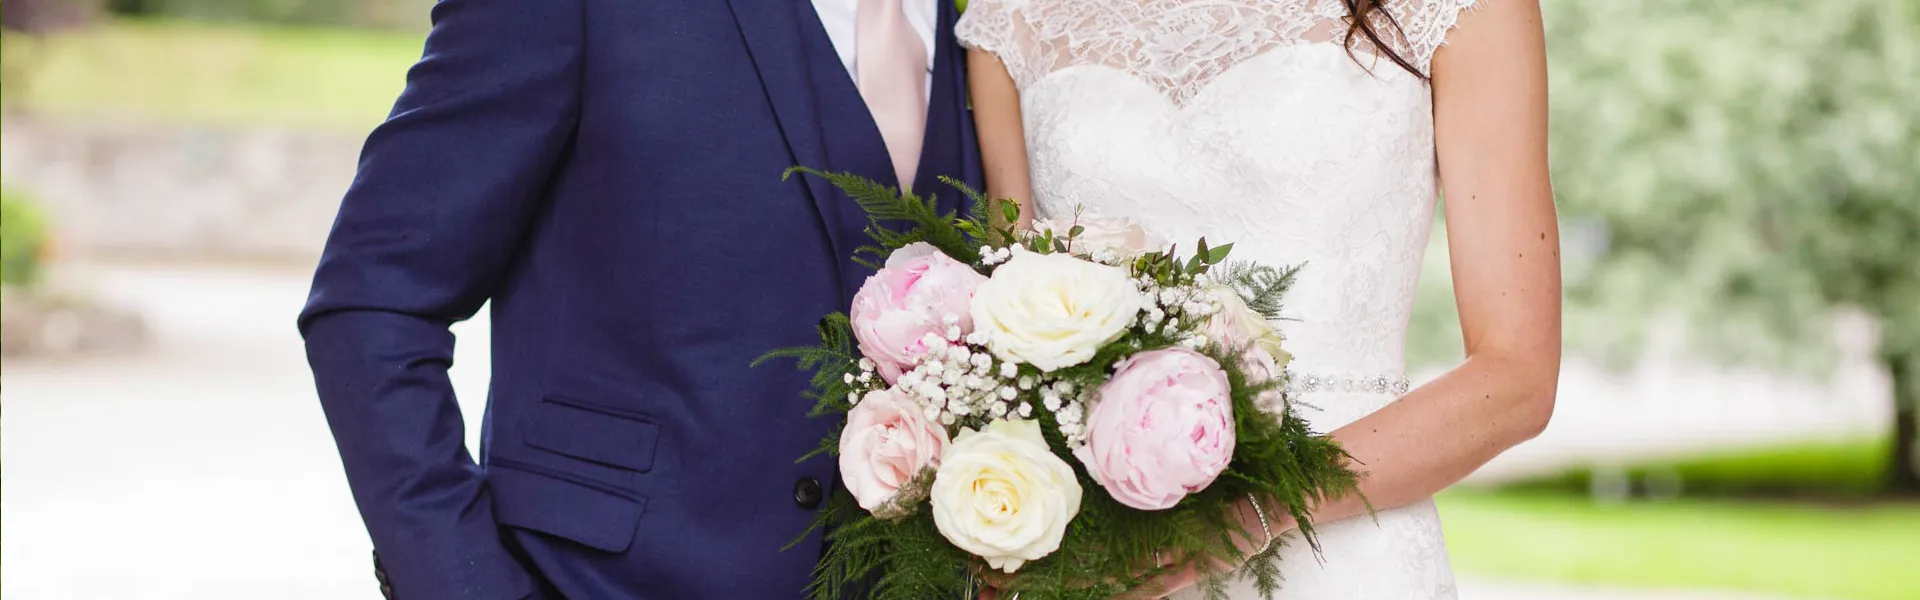 MorLove Blog Charlene Morton Wedding Photographer Clearwell Castle bride groom flowers